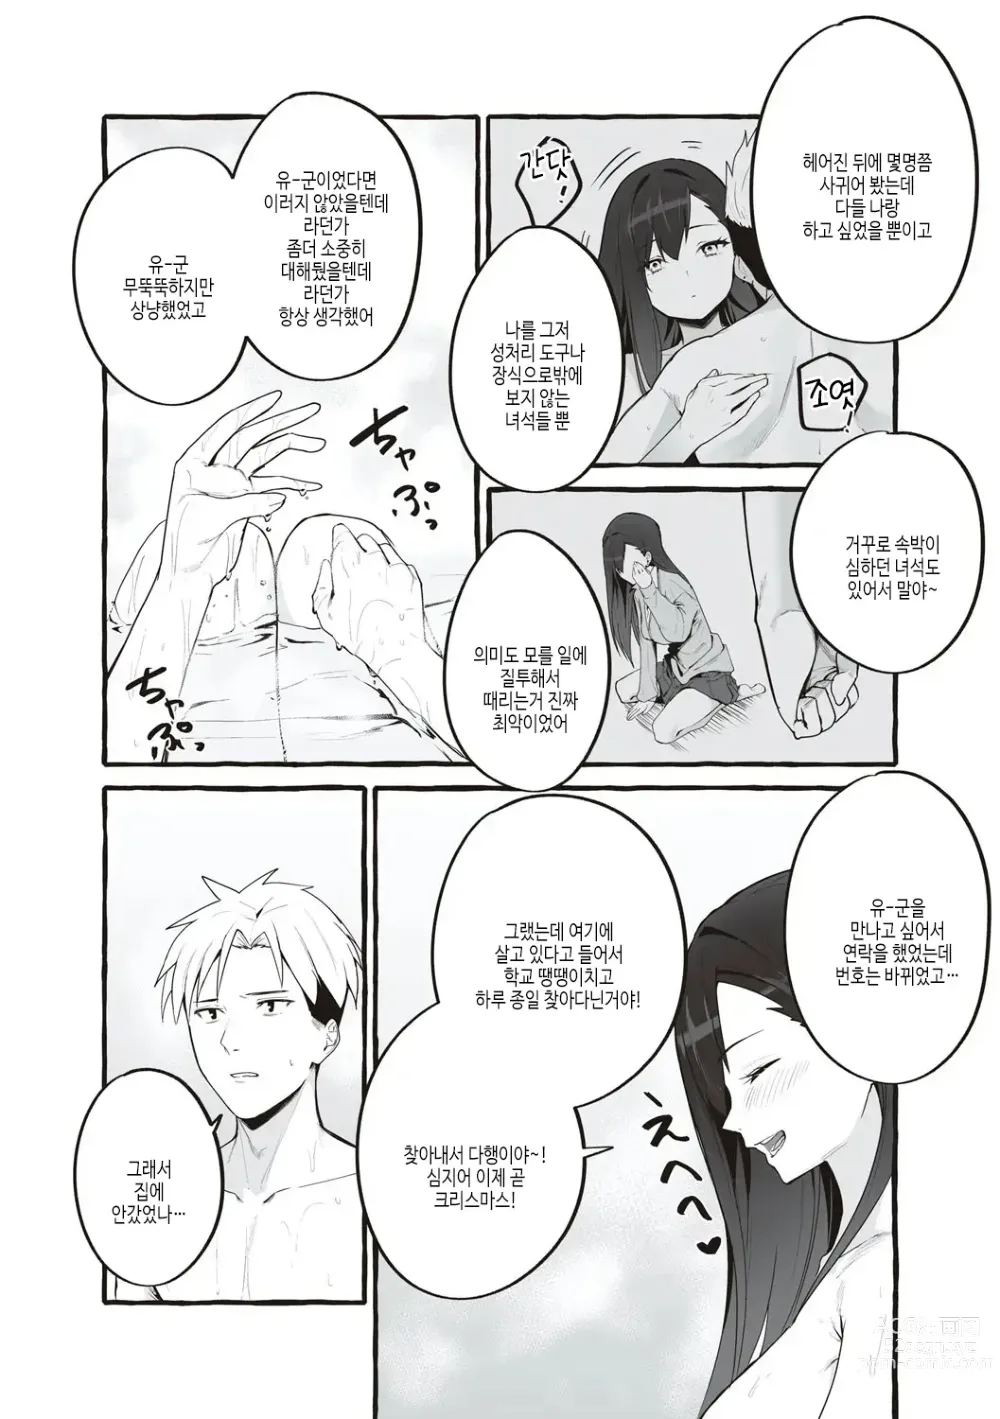 Page 193 of manga #순애 여친